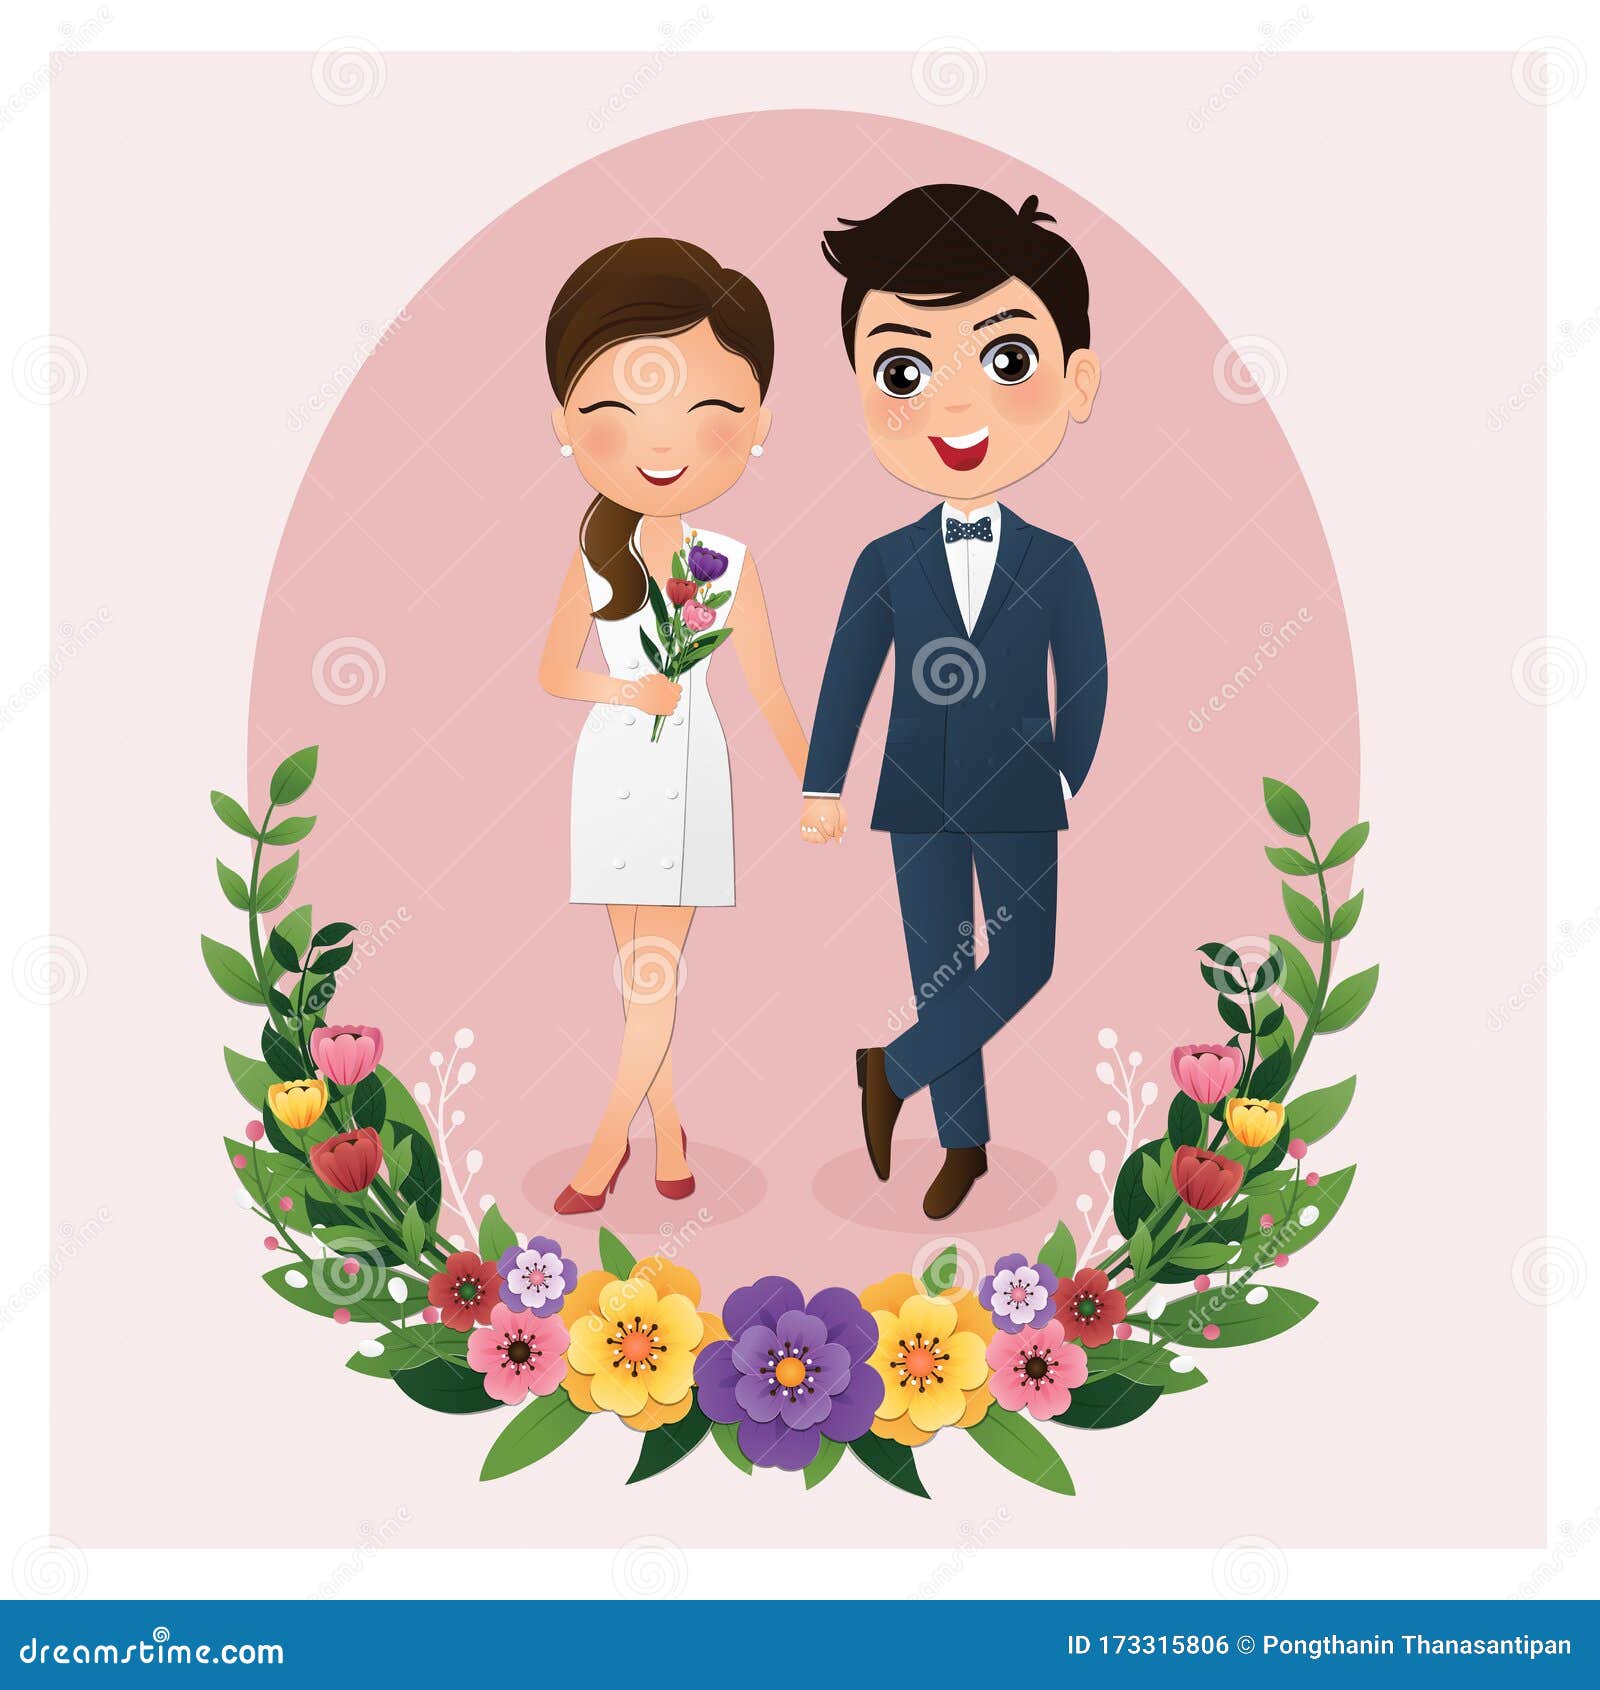 Wedding Invitation Card the Bride and Groom Cute Couple Cartoon   Vector Illustration for Event Celebration Stock  Illustration - Illustration of engagement, congratulation: 173315806